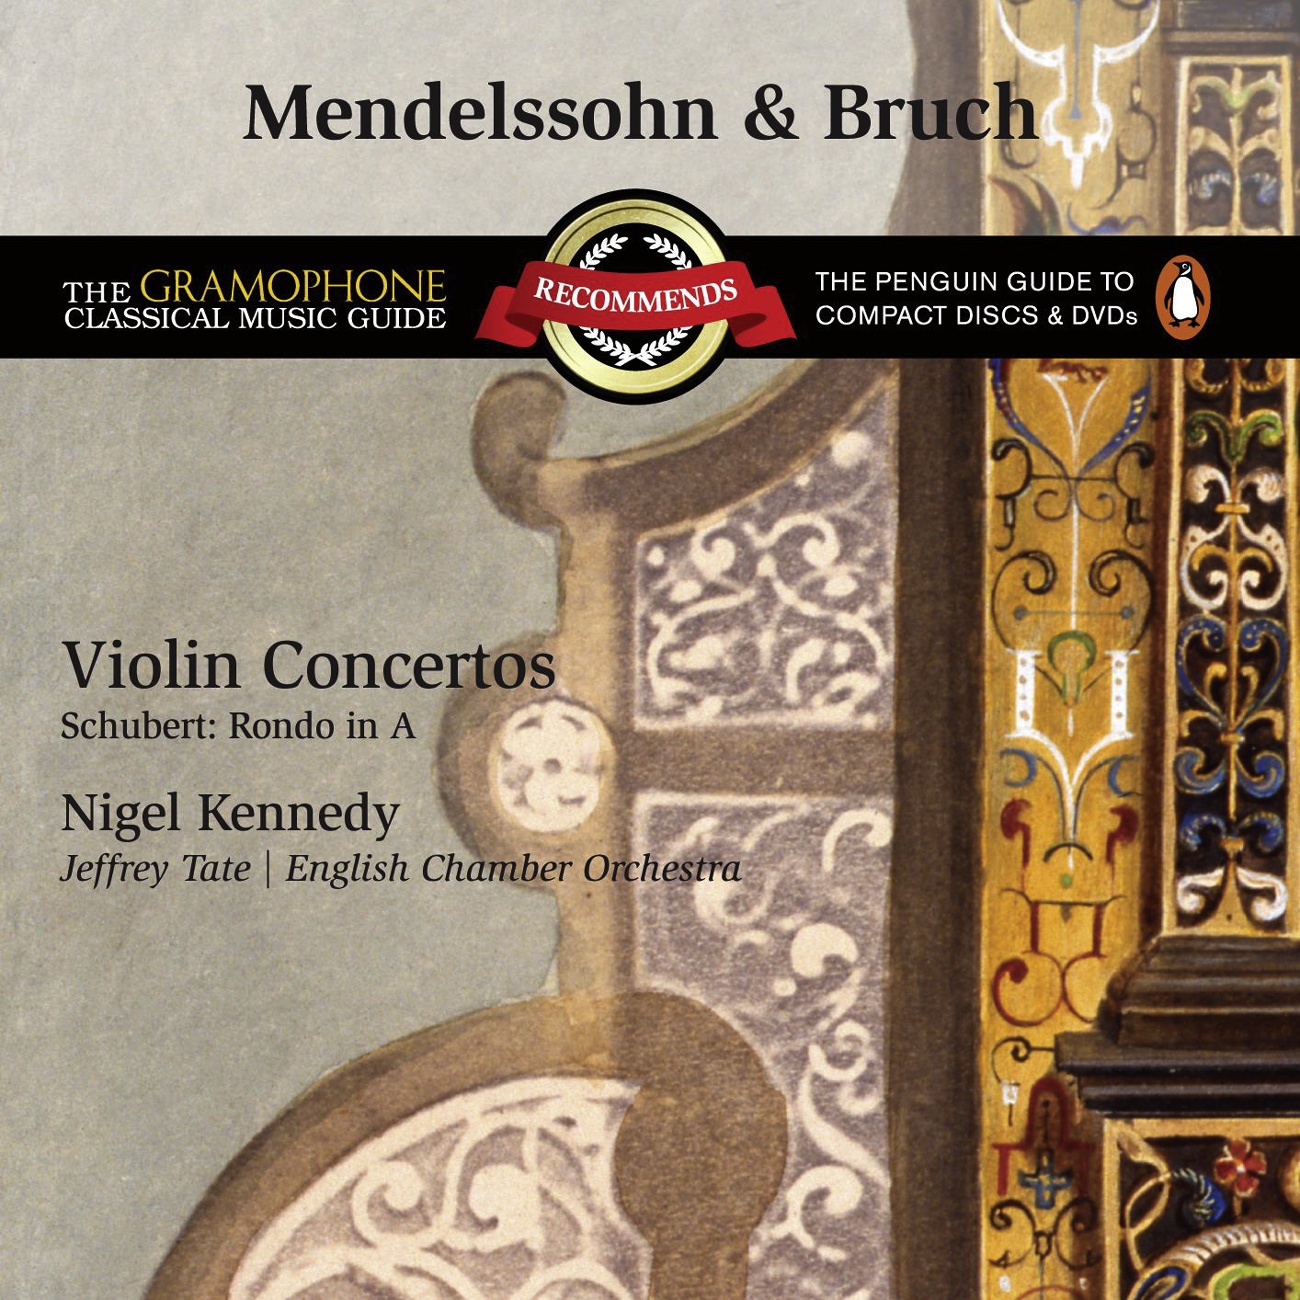 Concerto for Violin and Orchestra No. 1 in G minor Op. 26: III. Finale (Allegro energico)